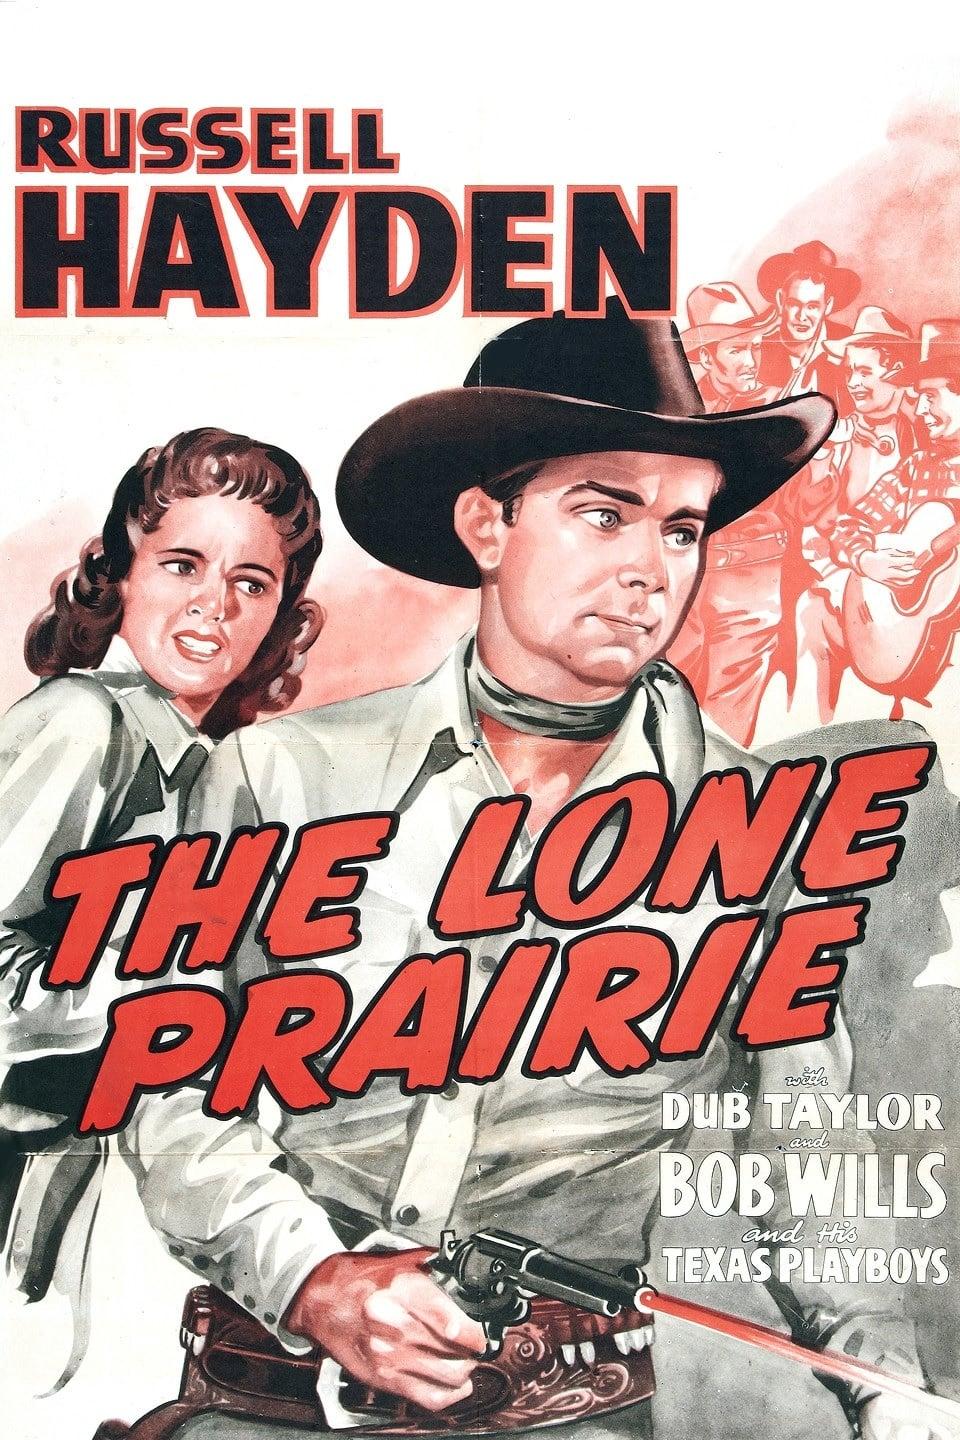 The Lone Prairie poster